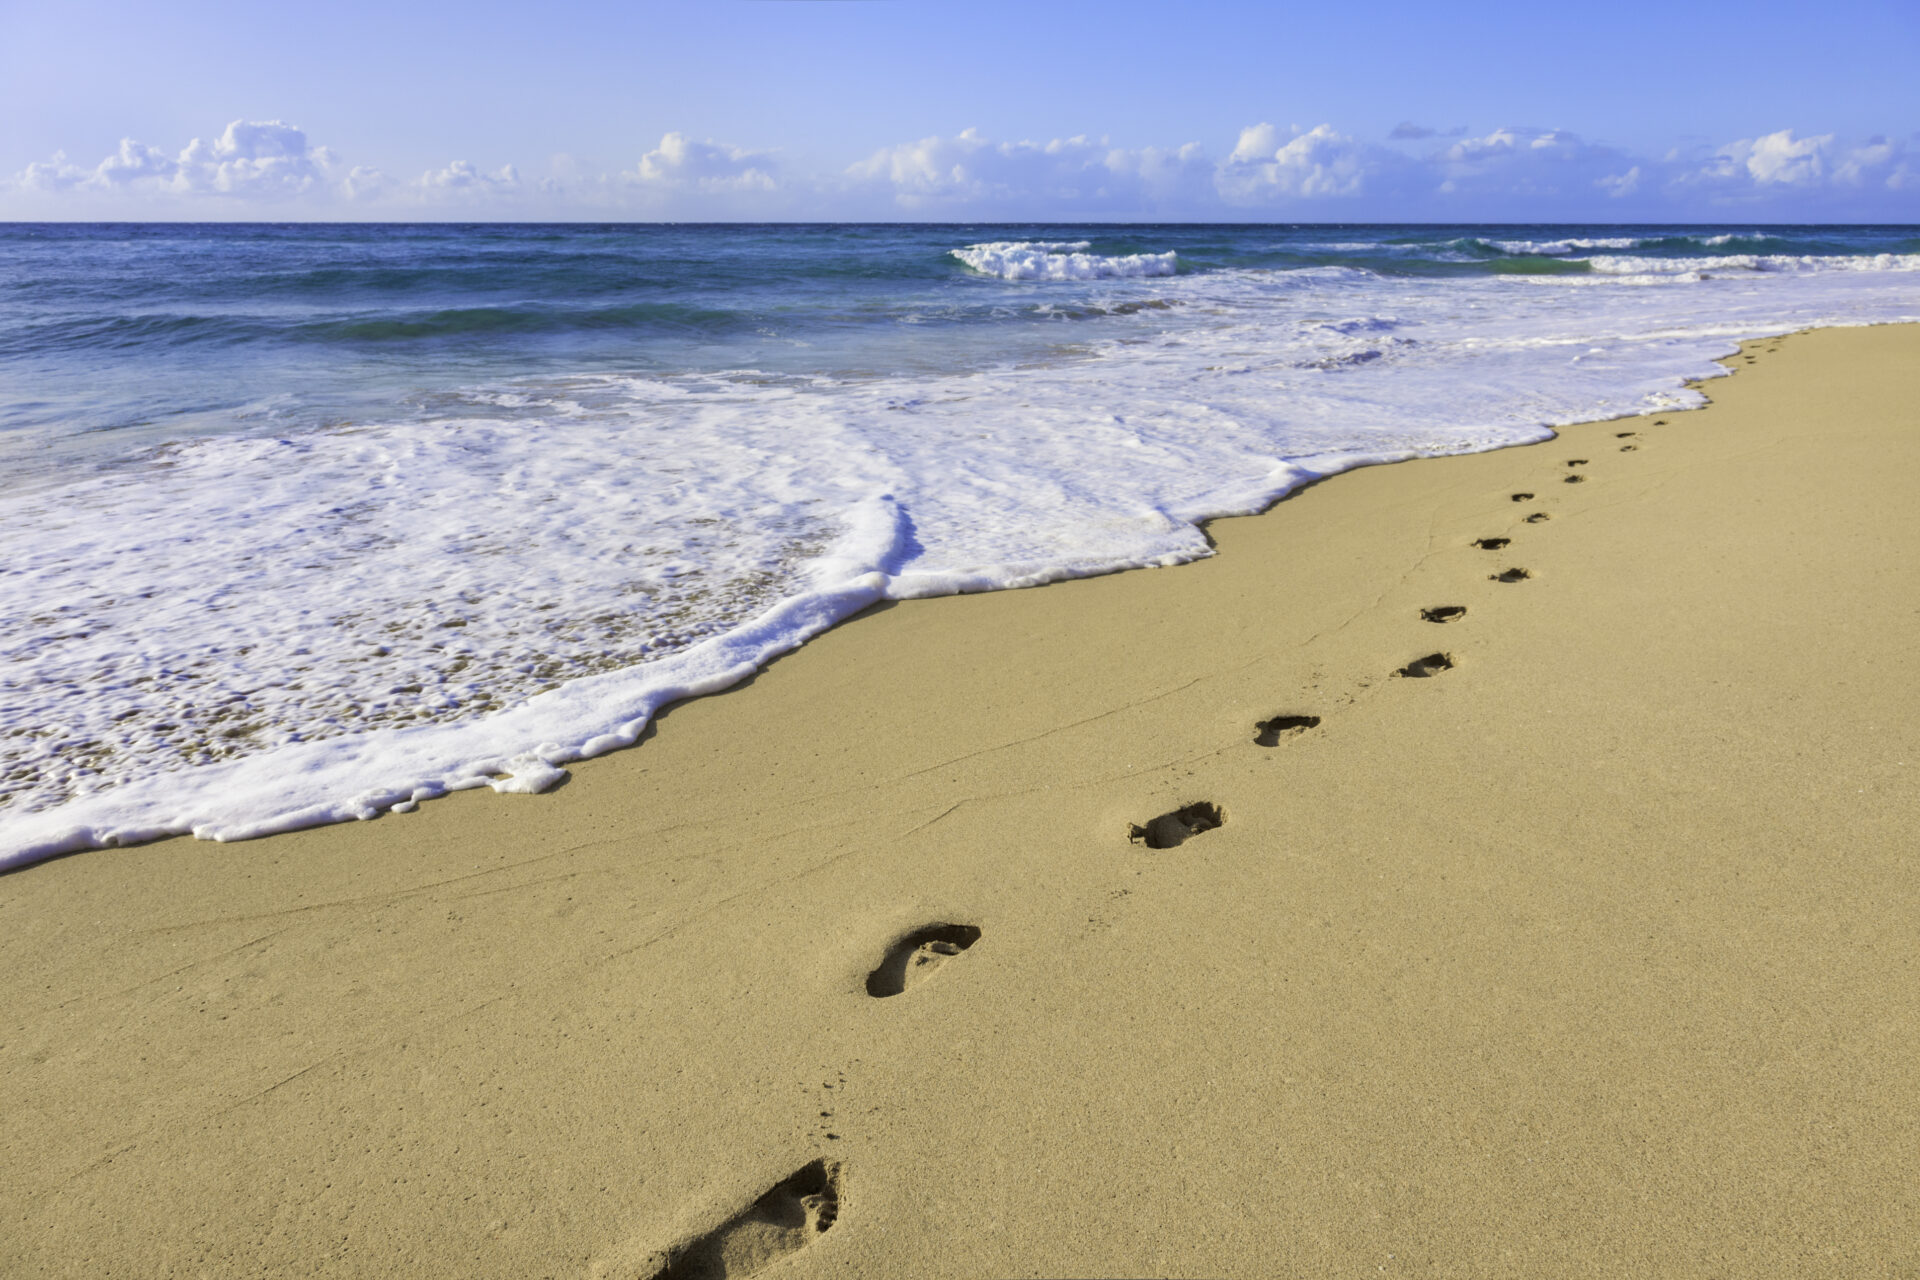 footprints and surf on tropical beach, Kauai, Hawaii